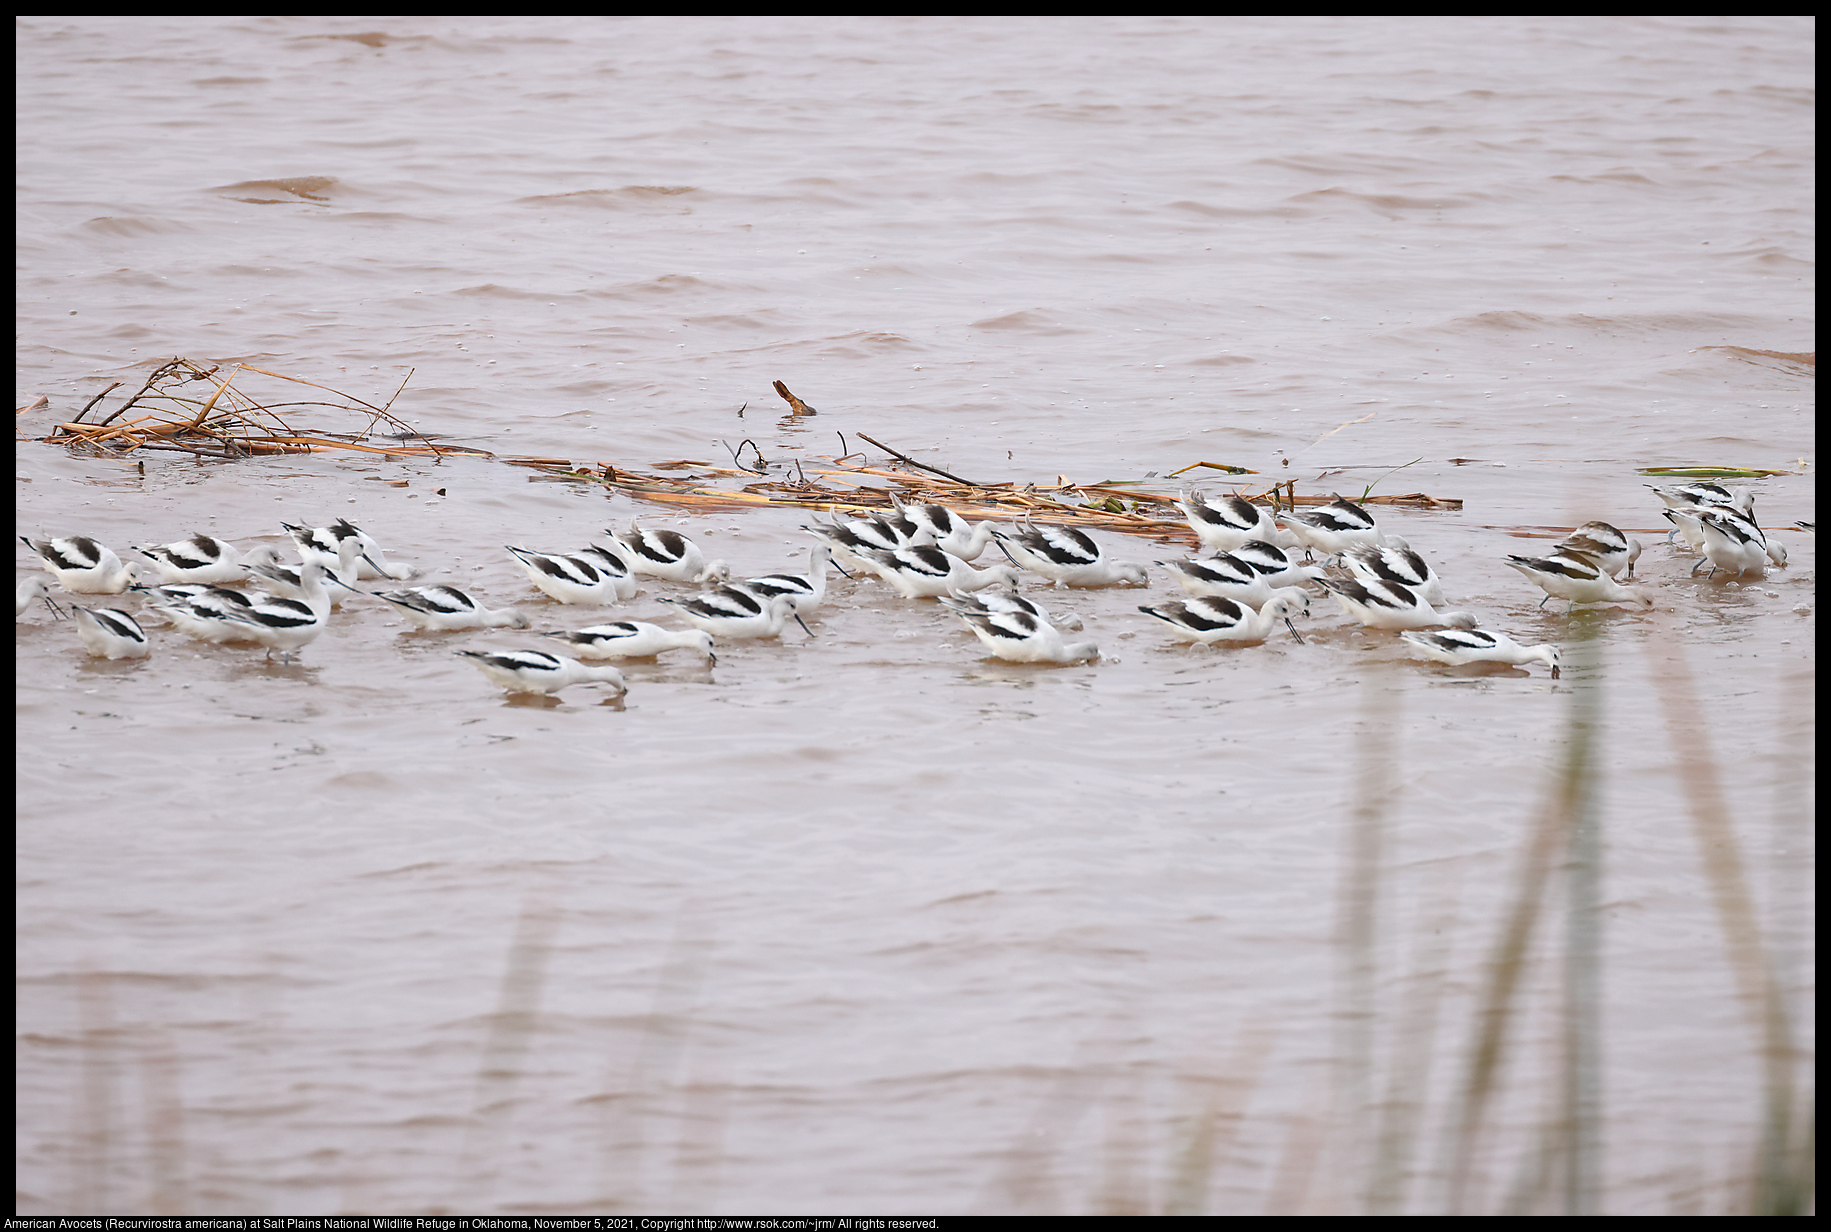 American Avocets (Recurvirostra americana) at Salt Plains National Wildlife Refuge in Oklahoma, November 5, 2021